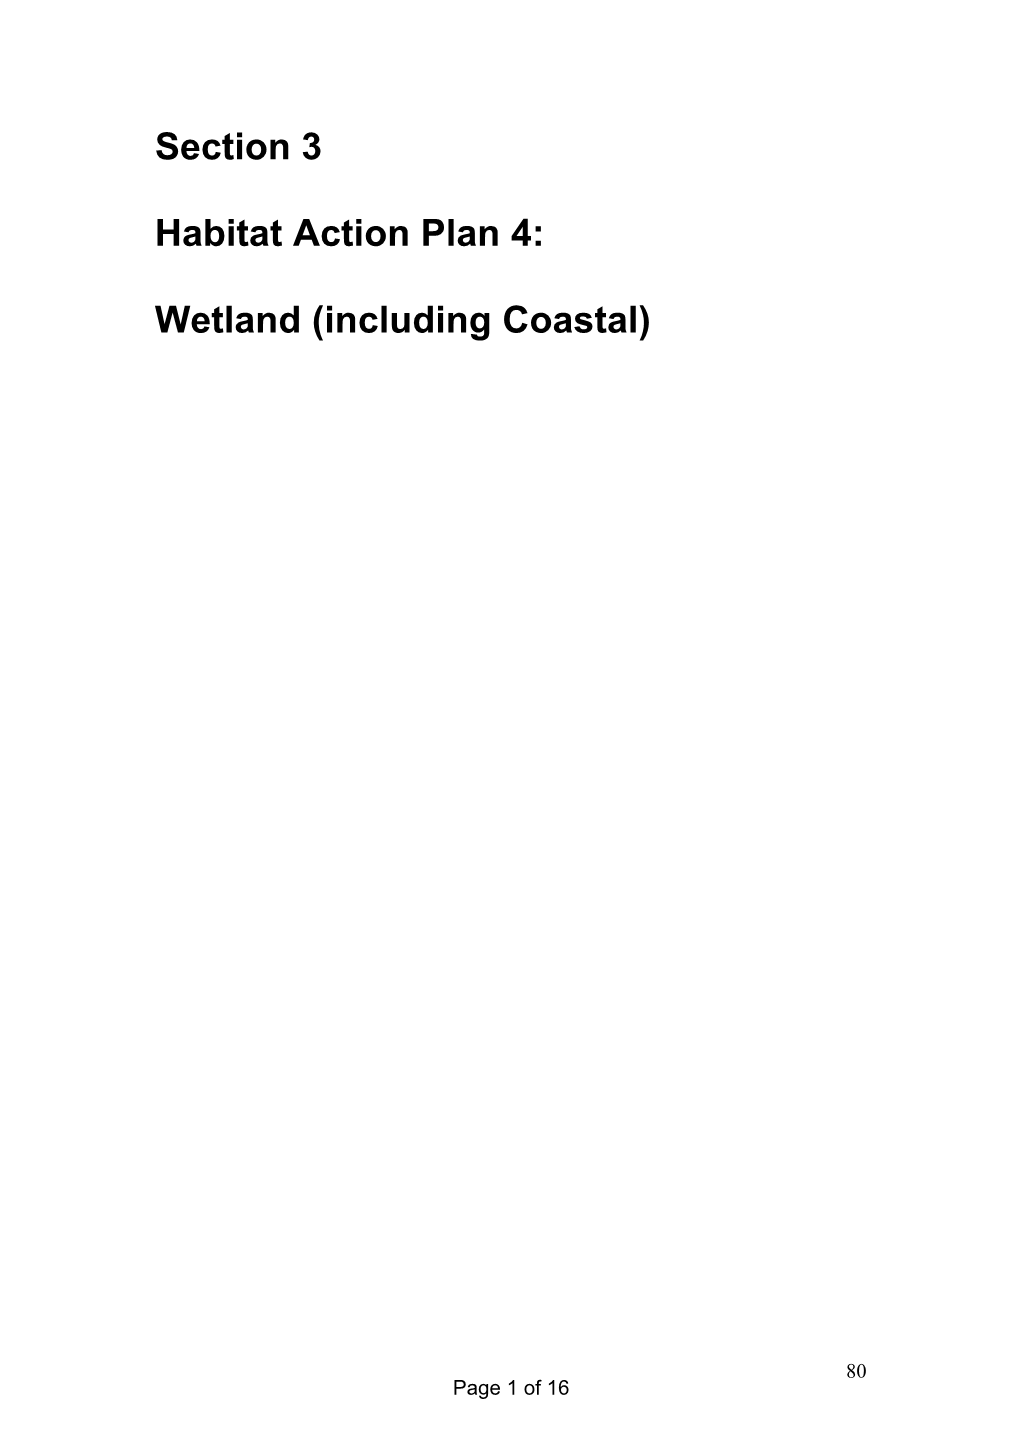 Section 3 Habitat Action Plan 4: Wetland